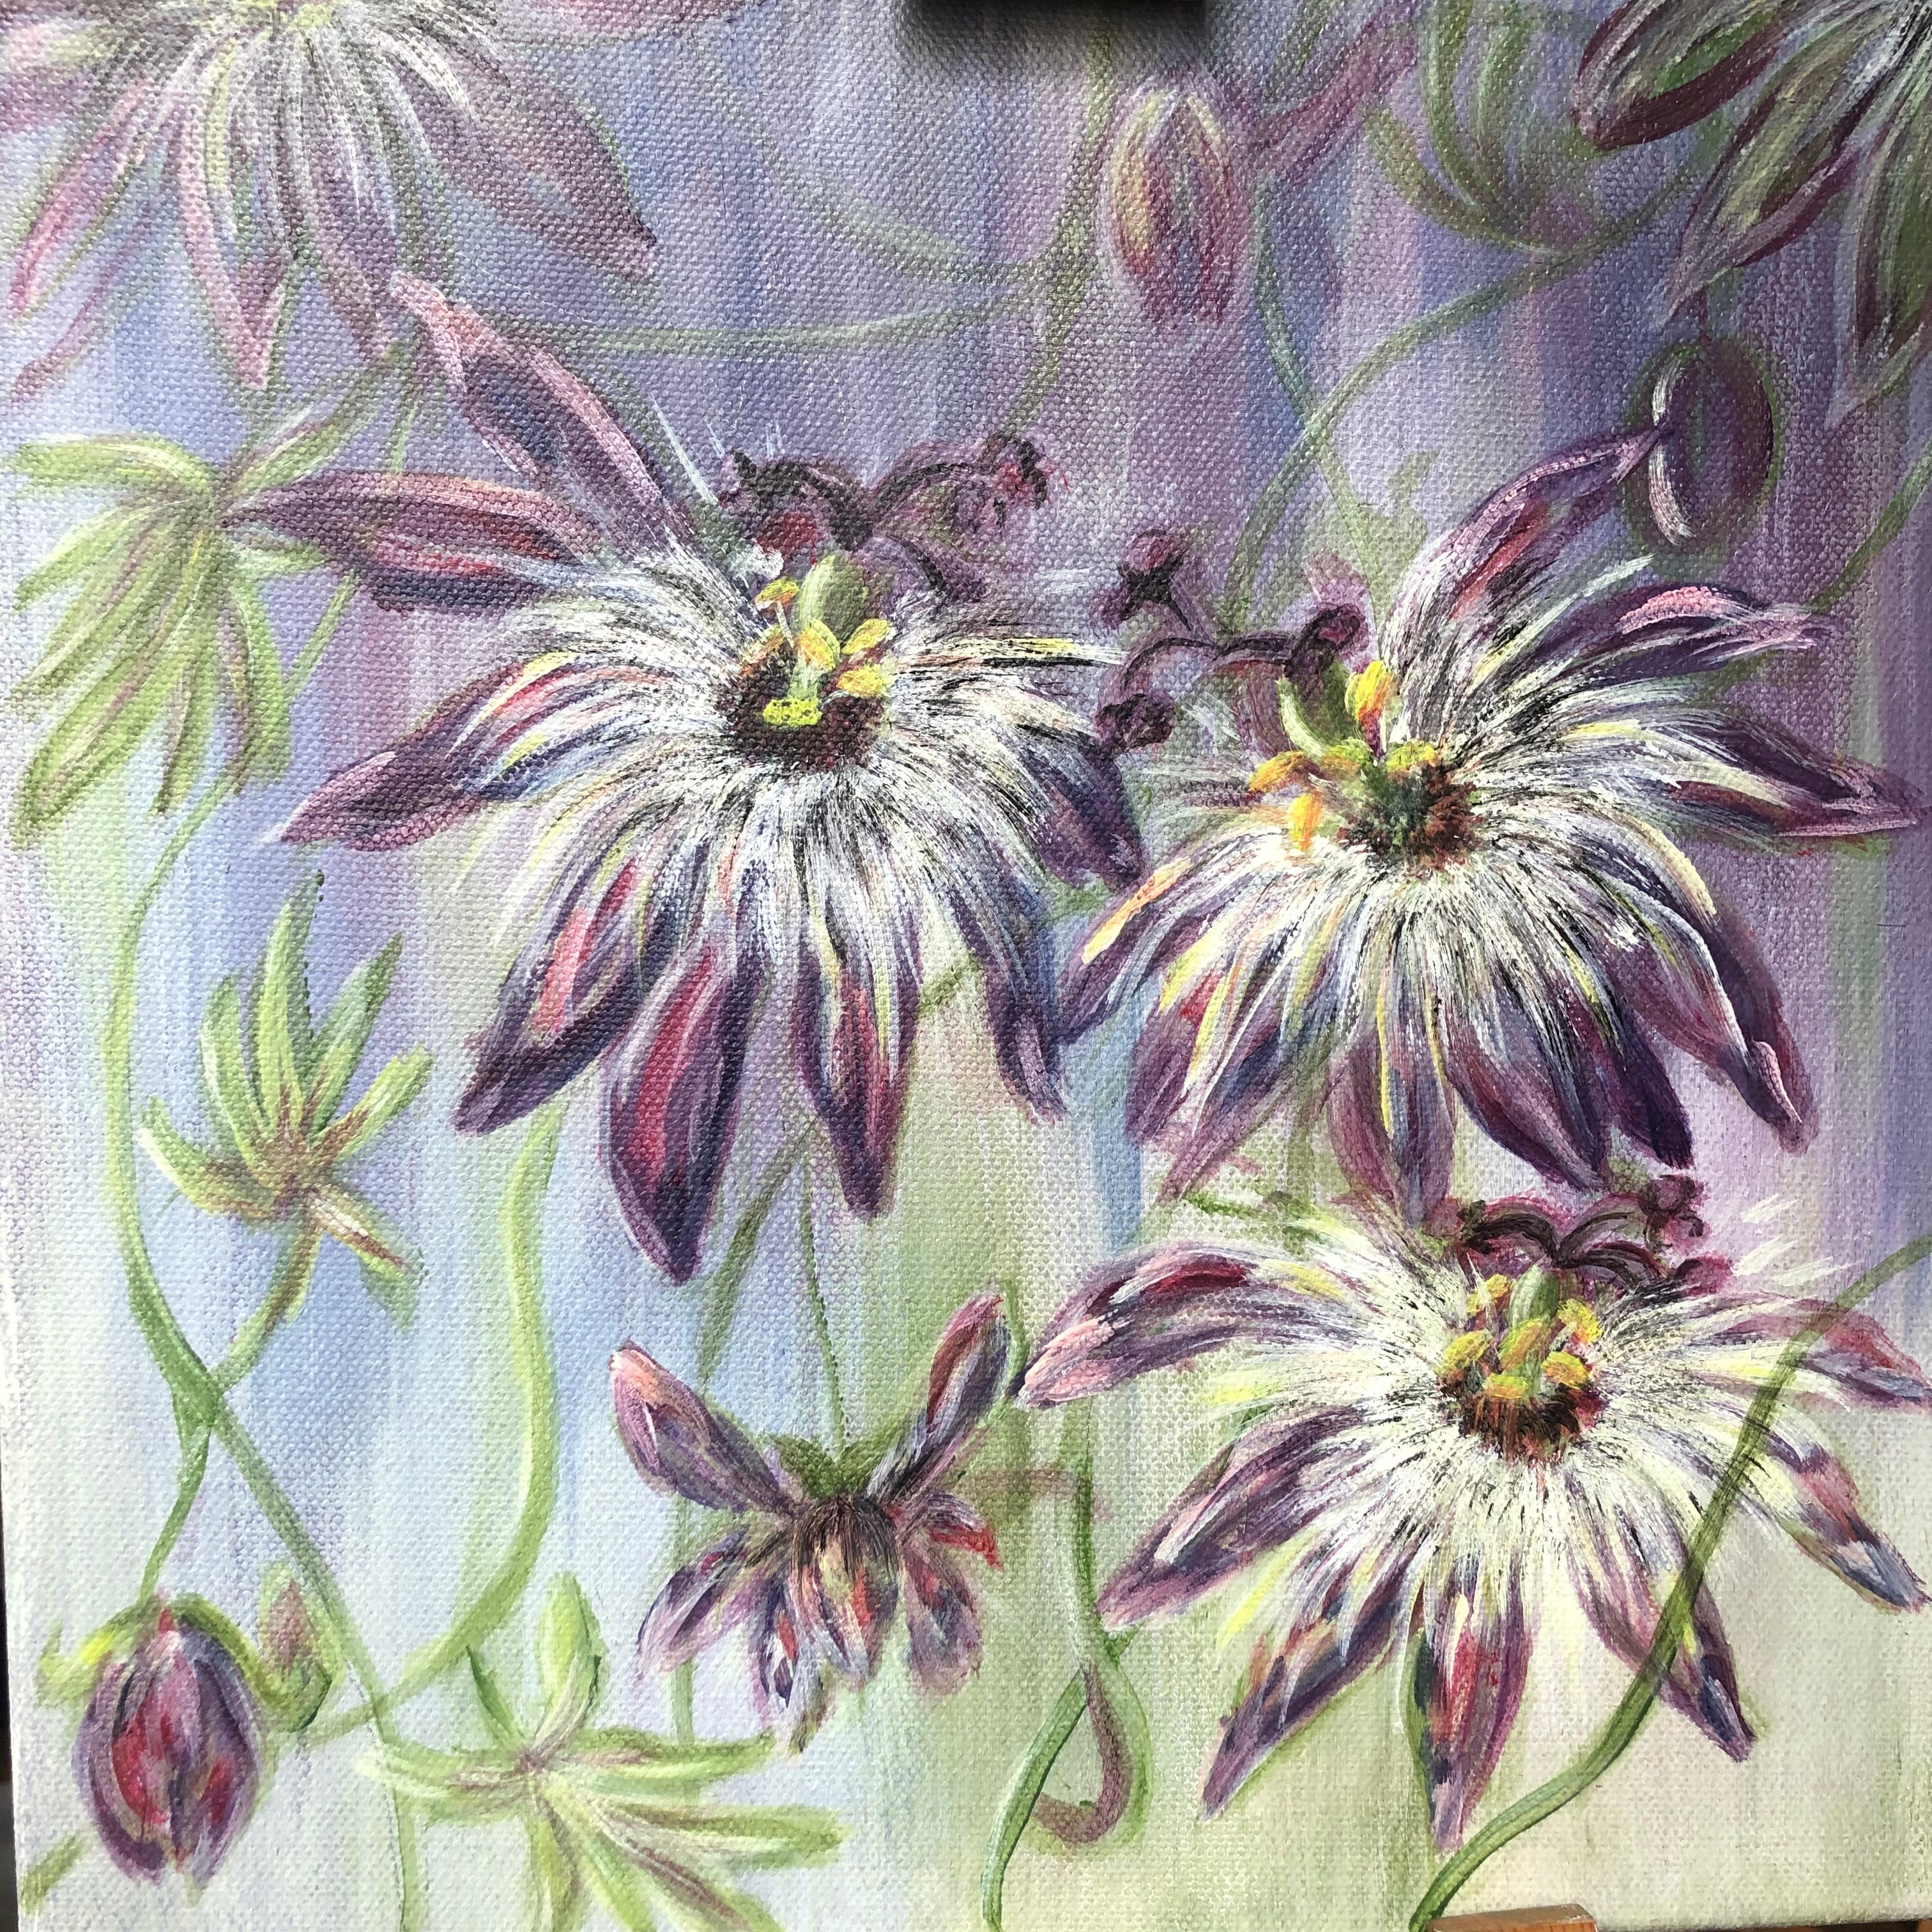 Small Passiflora Study Acrylic Painting